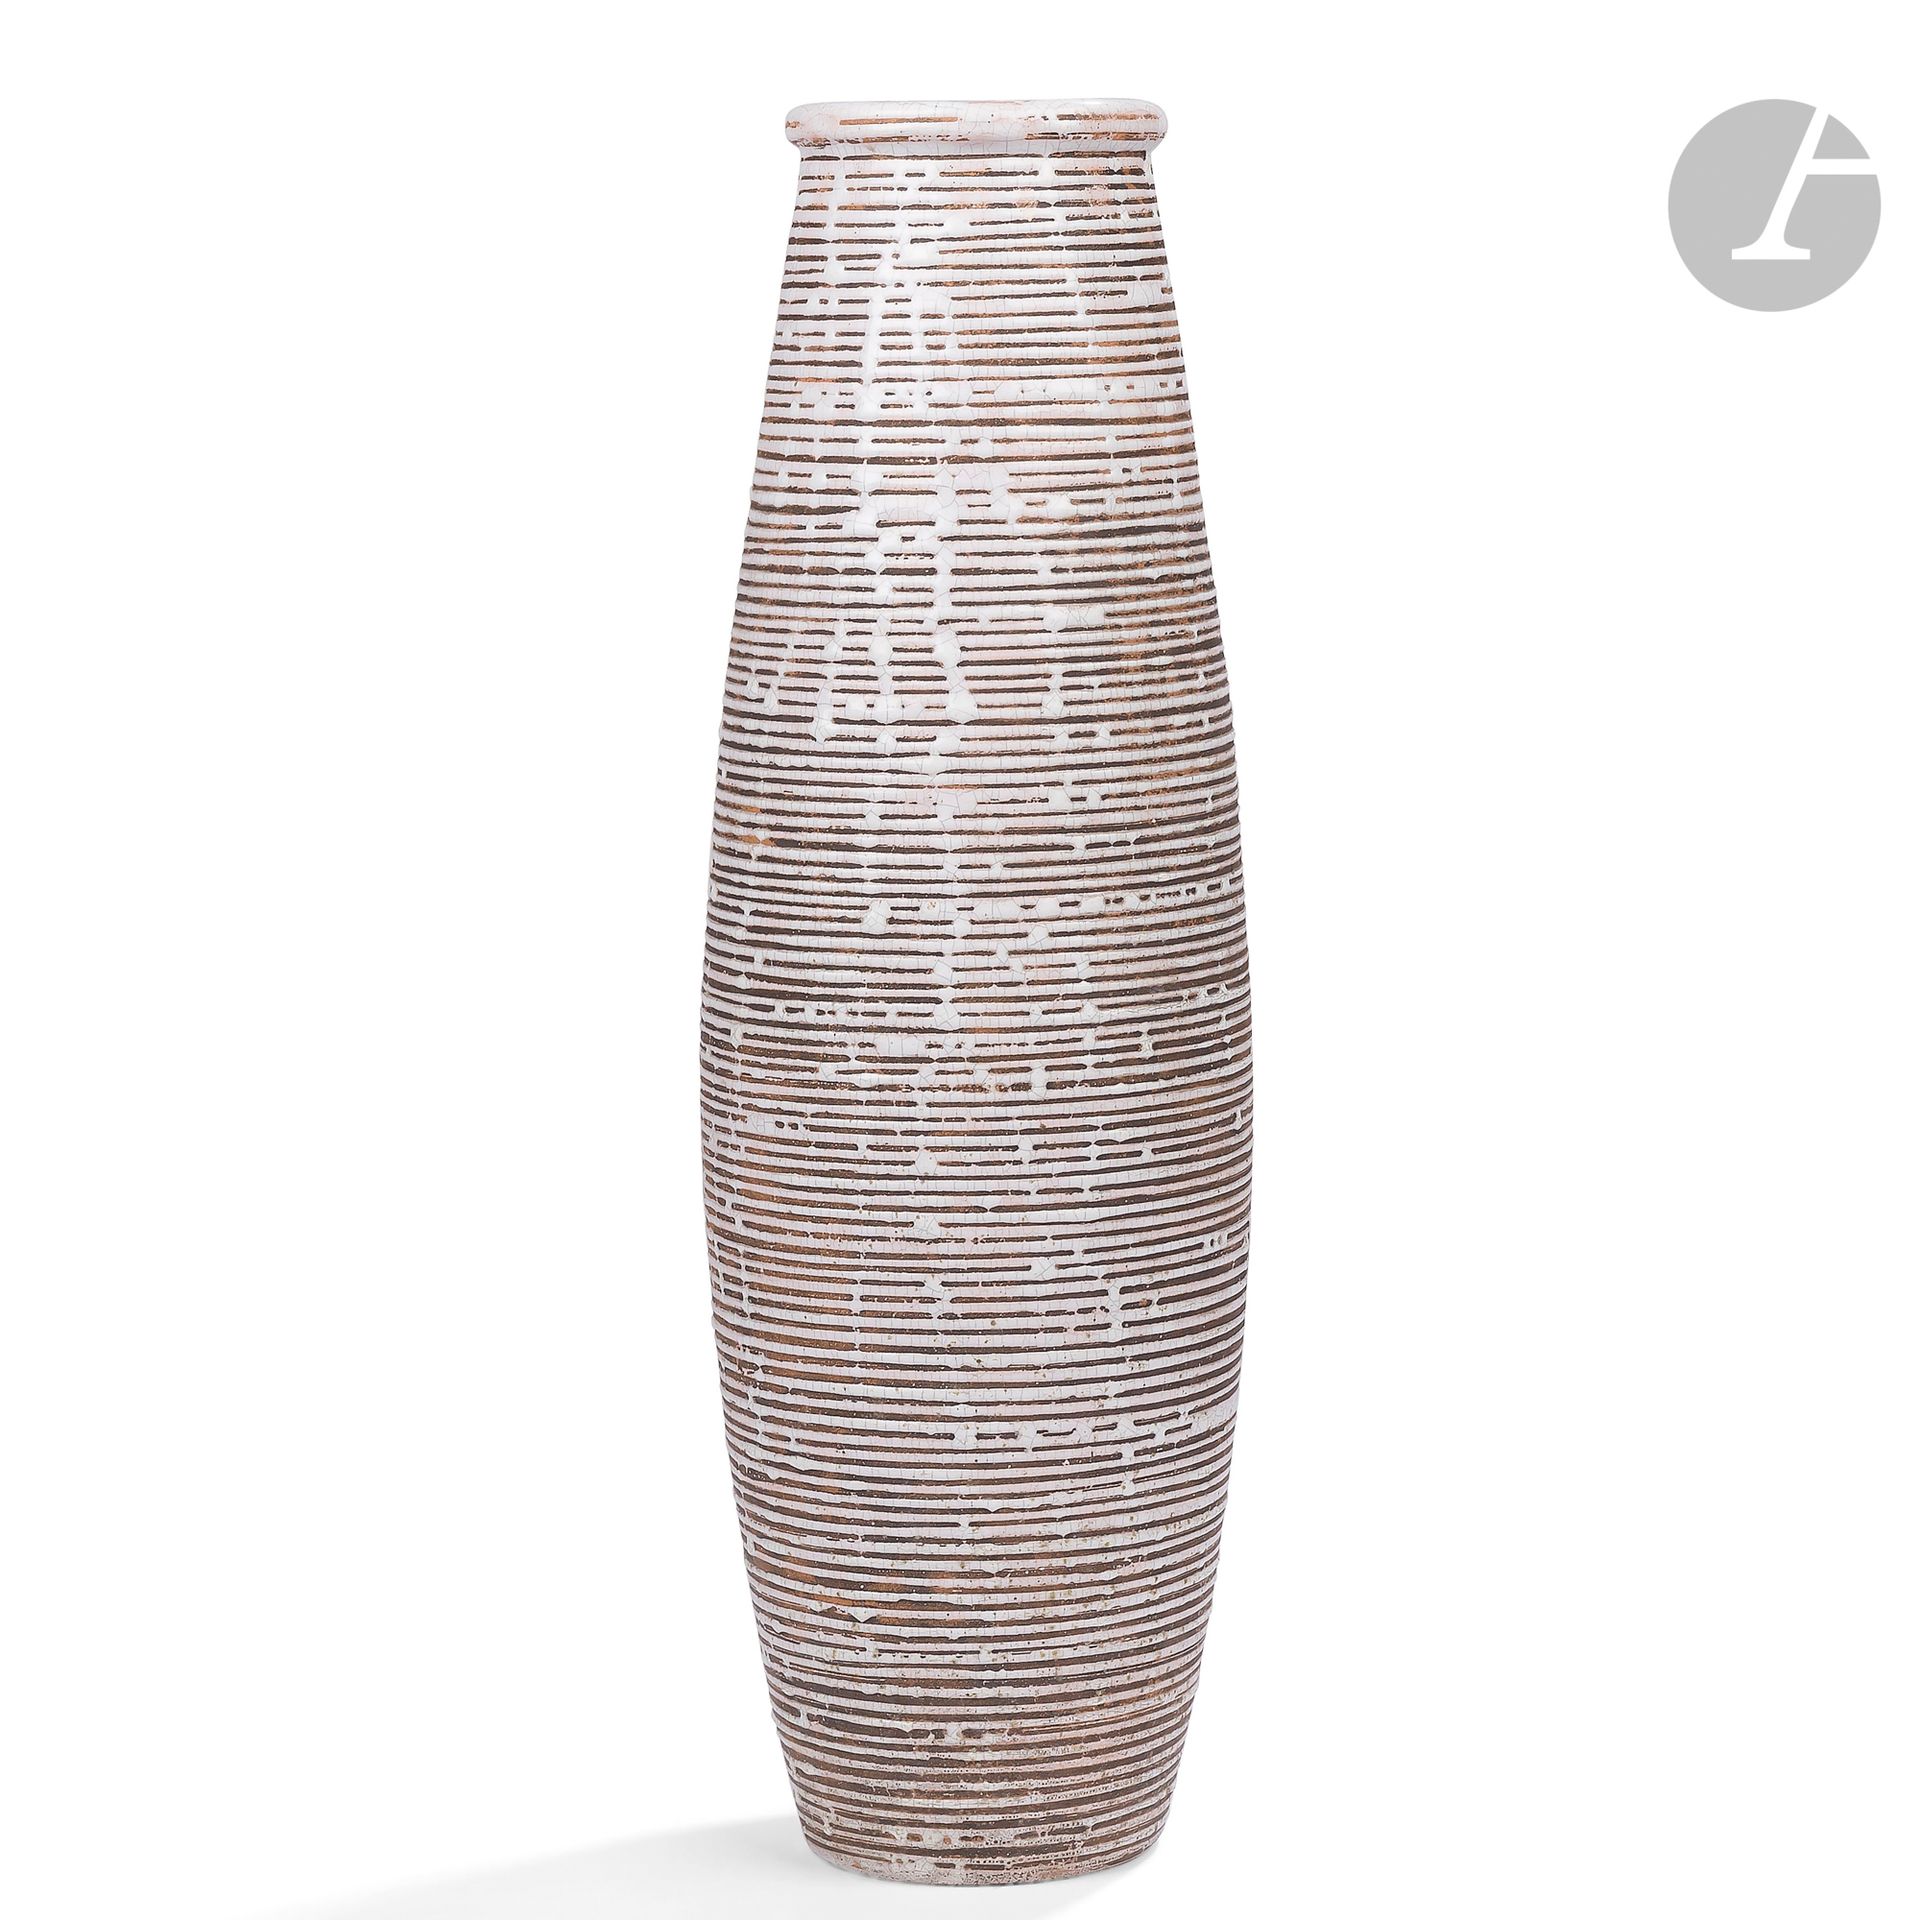 Null PRIMAVERA (SPRING ART WORKSHOP)
Superimposed circles
Tall, tapering vase.
C&hellip;